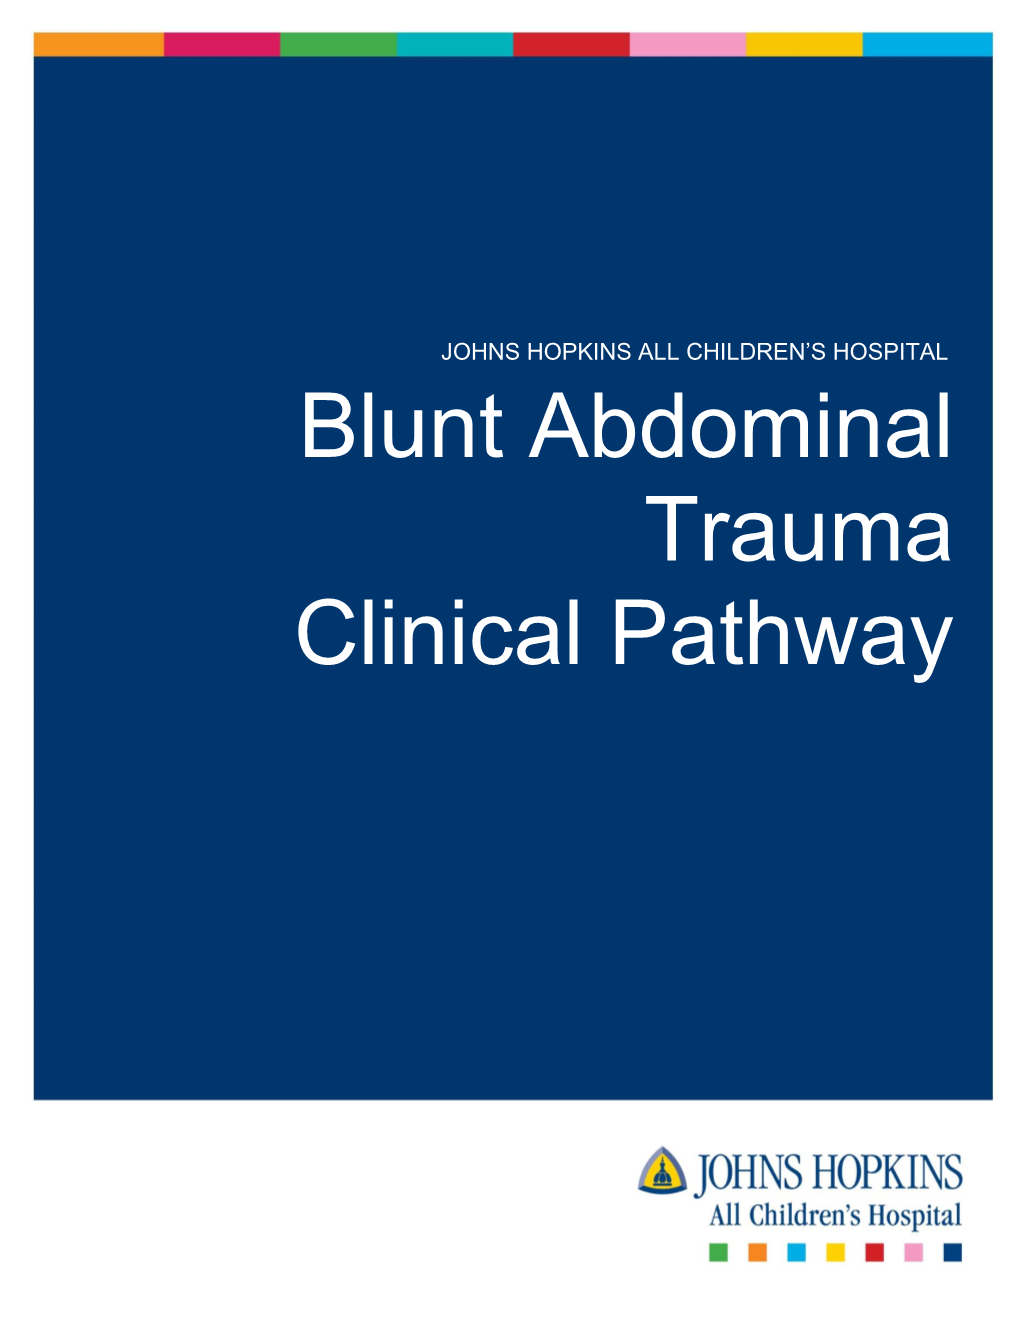 Blunt Abdominal Trauma Clinical Pathway Johns Hopkins All Children’S Hospital Blunt Abdominal Trauma Clinical